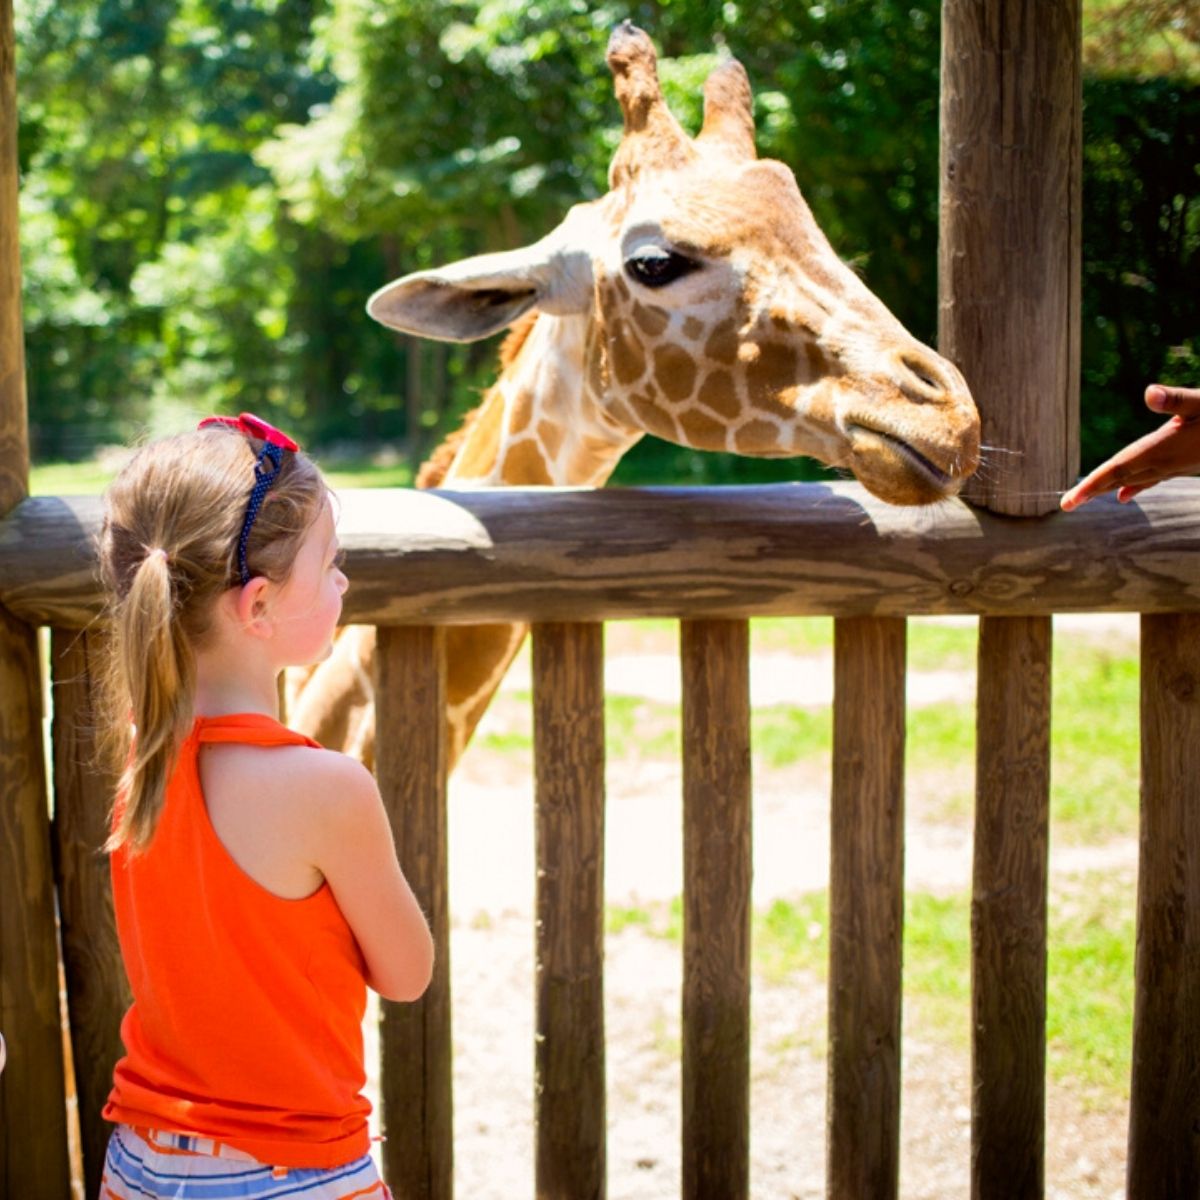 A young girl feeds a giraffe up close.